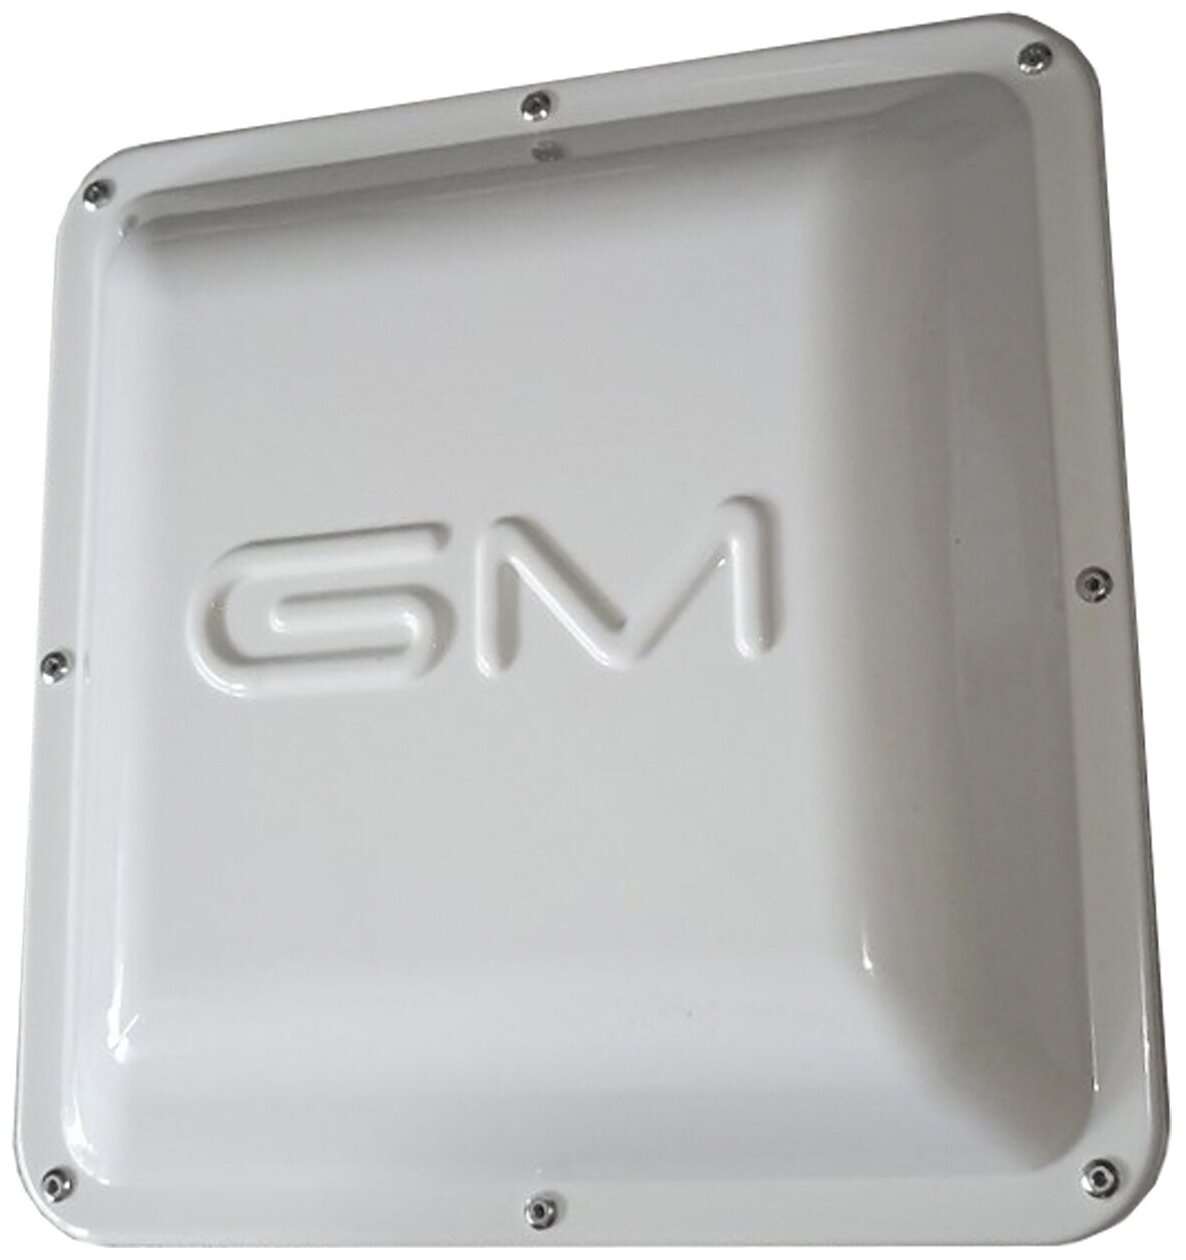 Антенна GoldMaster TOR MIMO 5F 2х2 направленная панельная антенна 75 Ом Ga=15dB F=17-27 4G LTE Wi-Fi 3G 2G